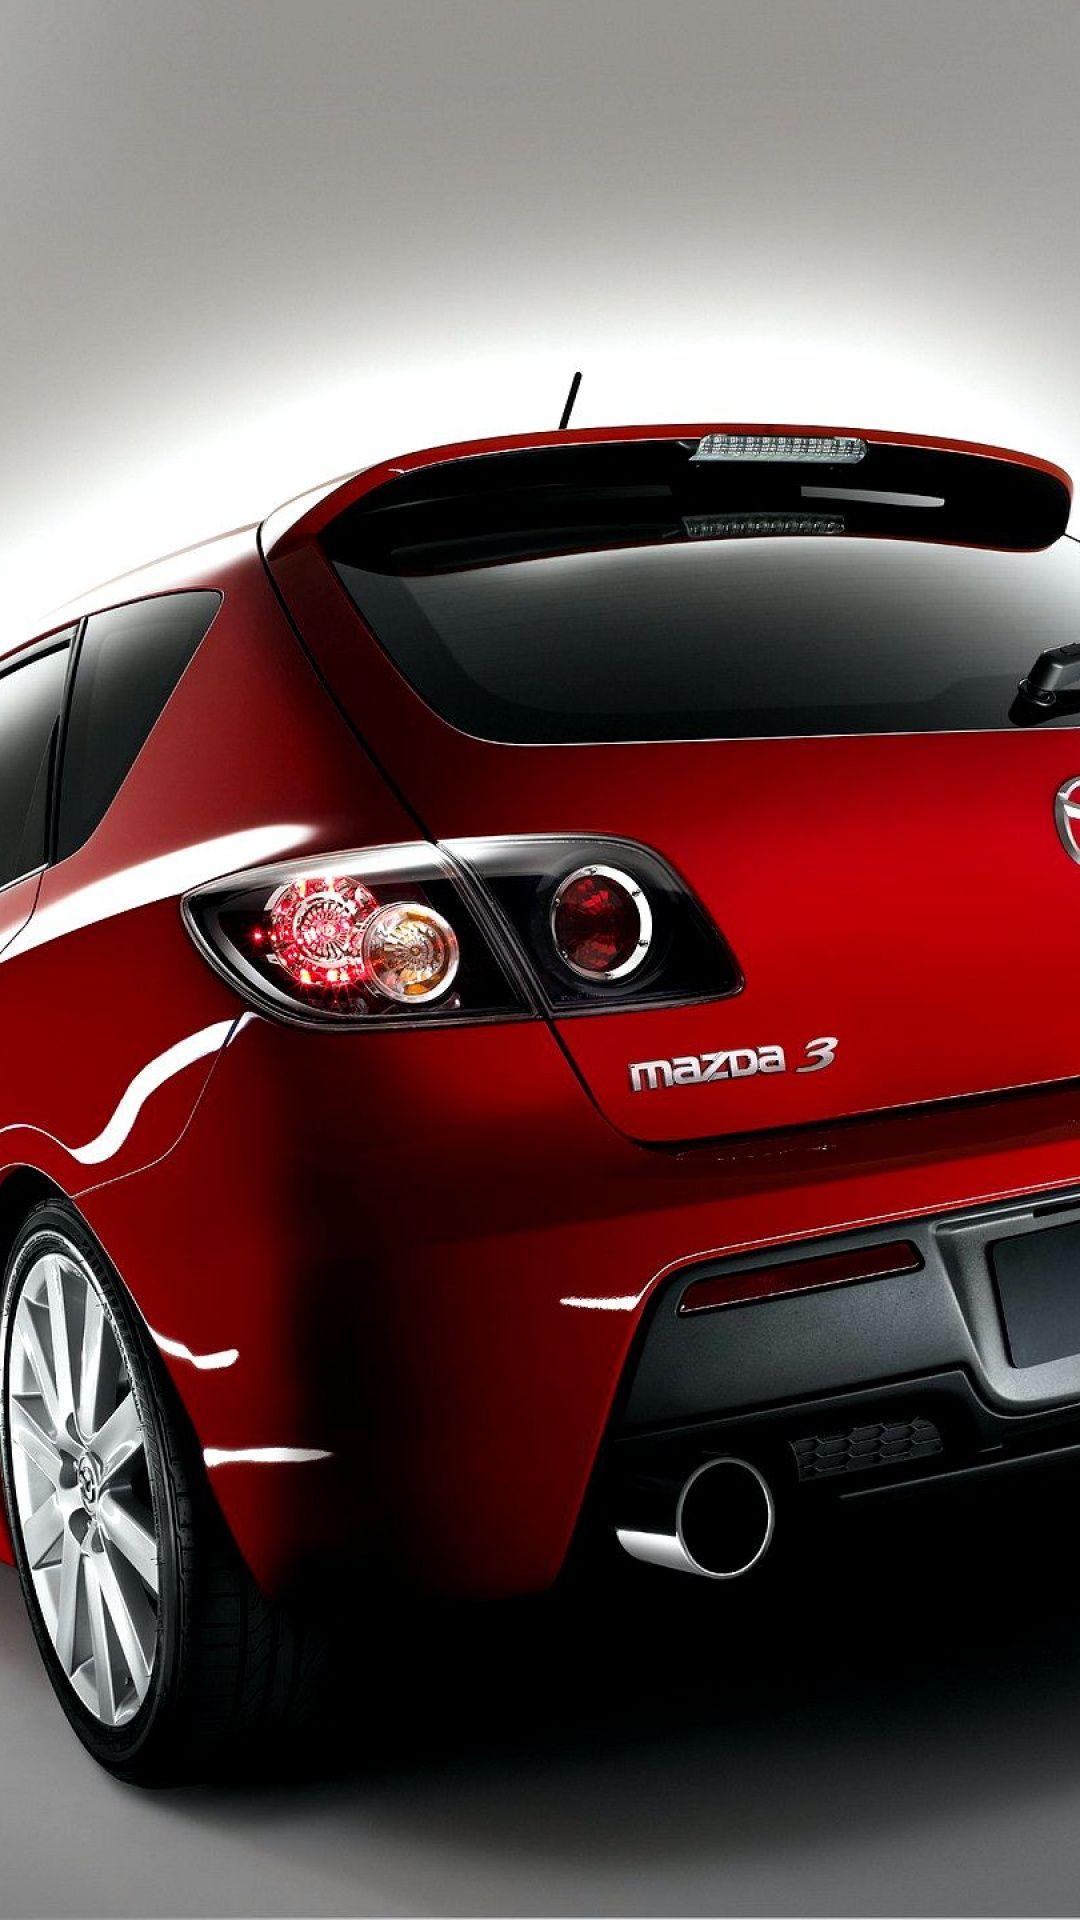 Mazda 3 MPS iPhone 6 Wallpaper